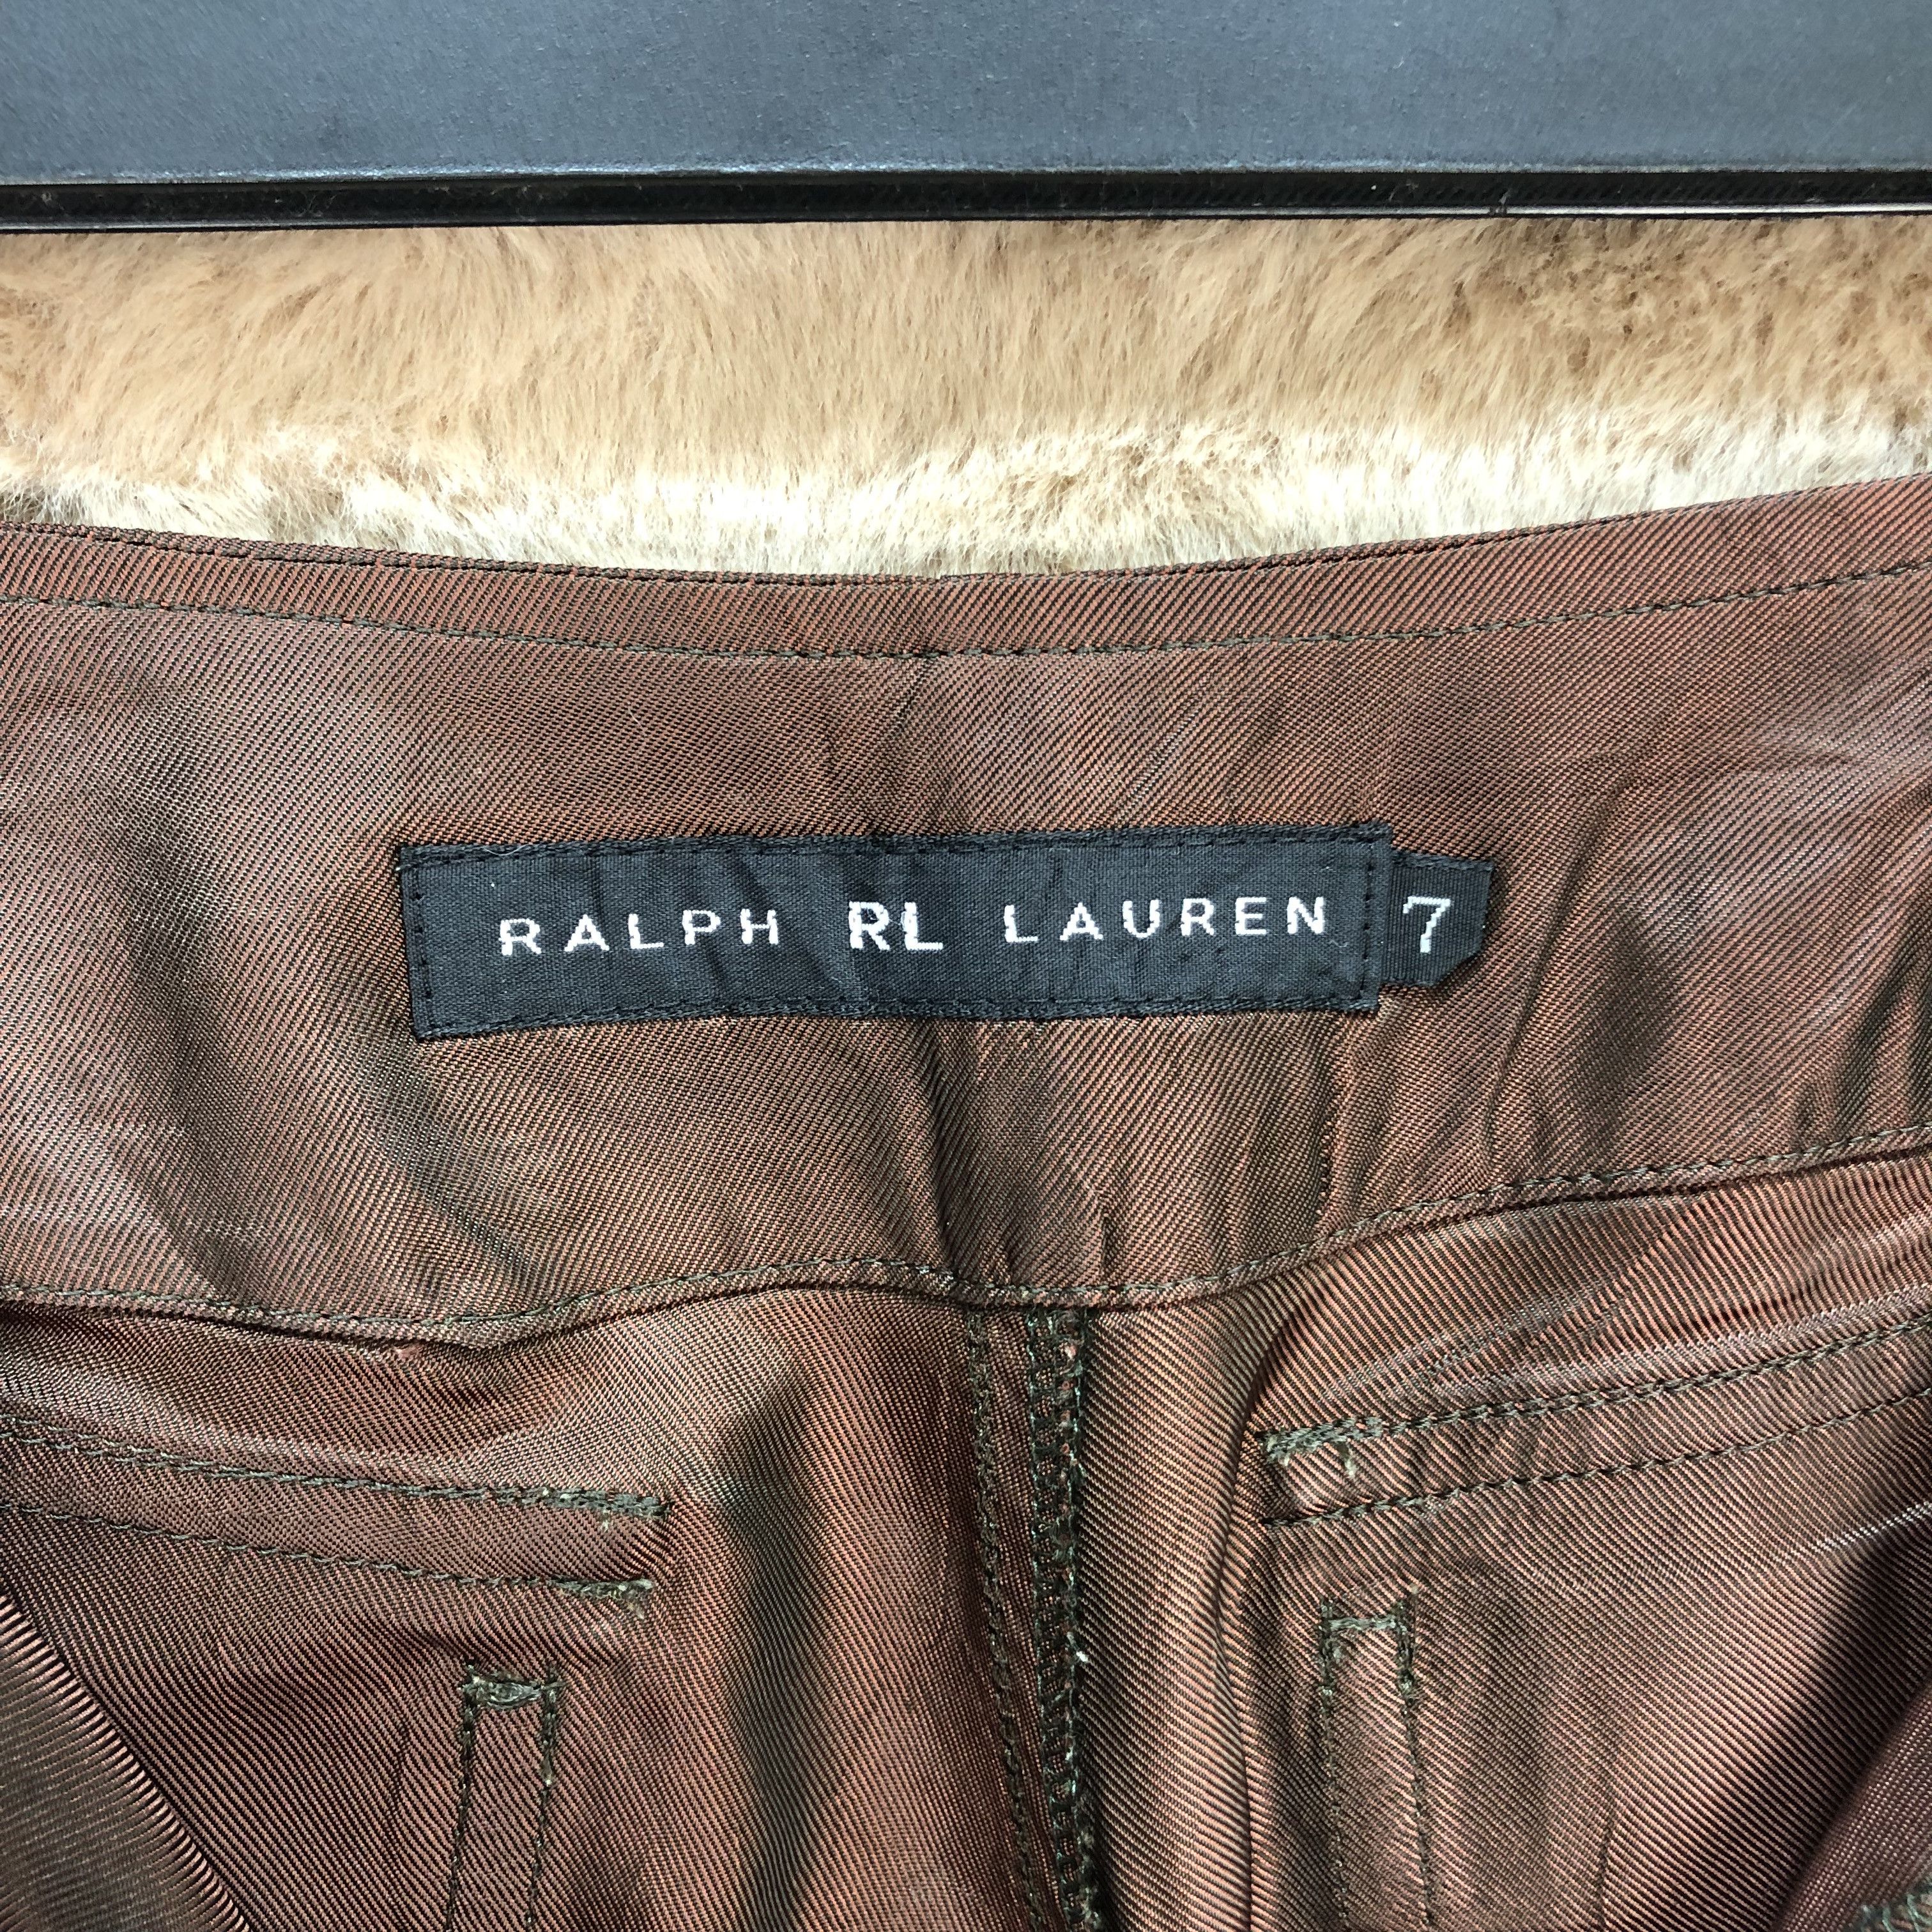 RALPH LAUREN RAYON LOOSE LIGHT PANTS #5639-201 - 6